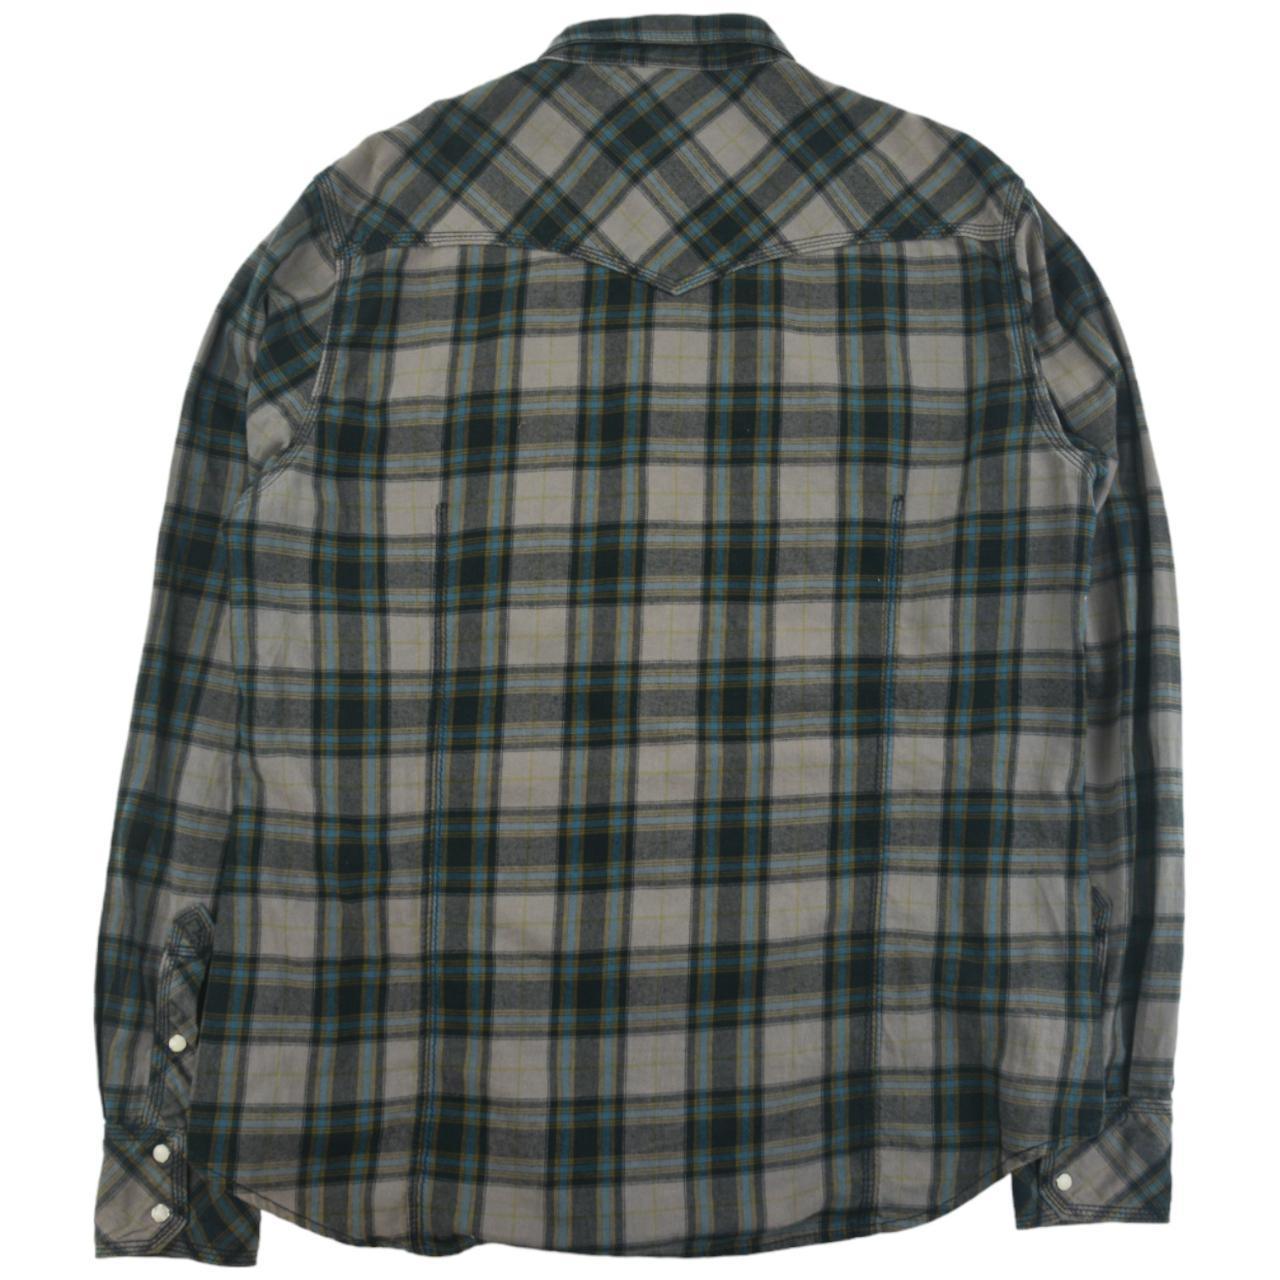 Vintage True Religion Lumberjack Shirt Size XL - Known Source